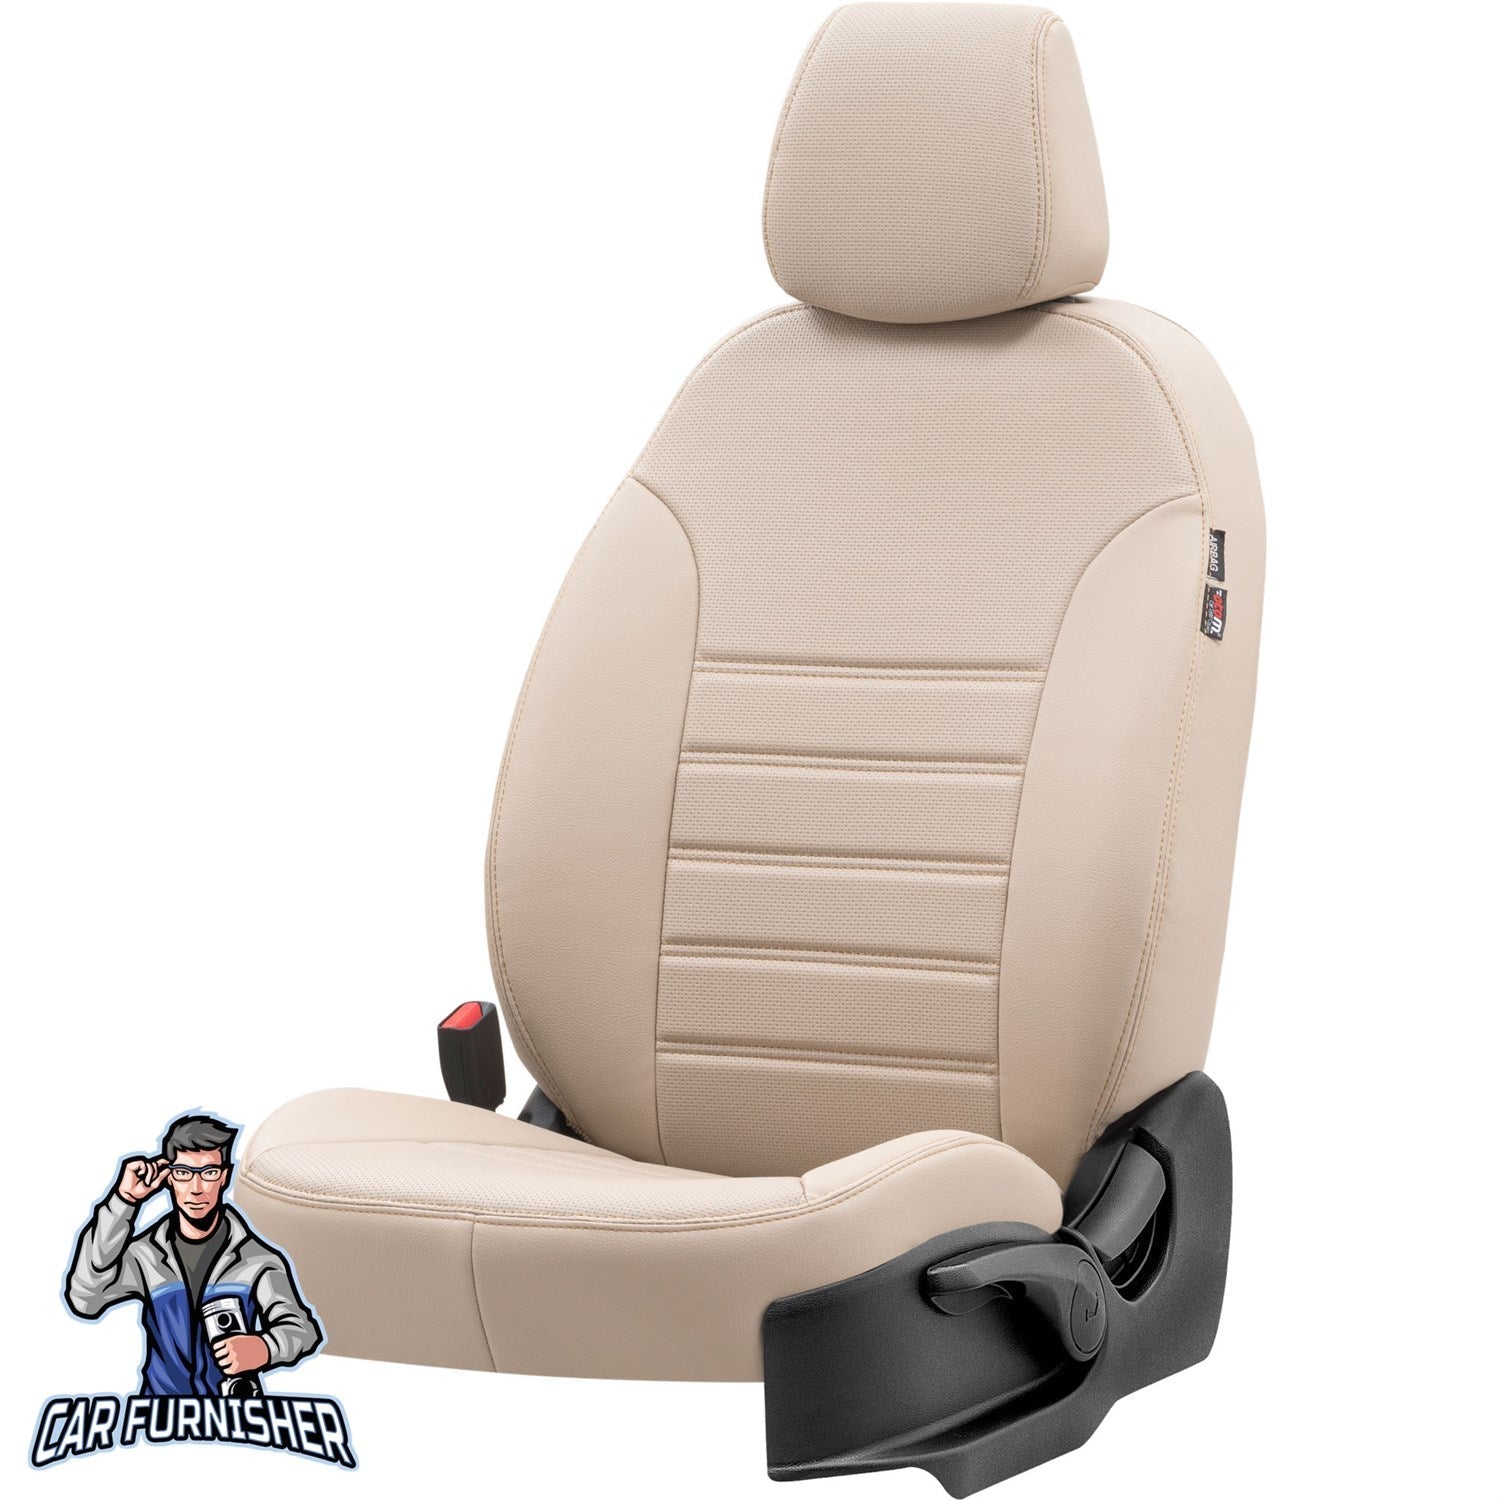 Fiat Bravo Car Seat Covers 2007-2013 New York Design Beige Full Set (5 Seats + Handrest) Leather & Fabric